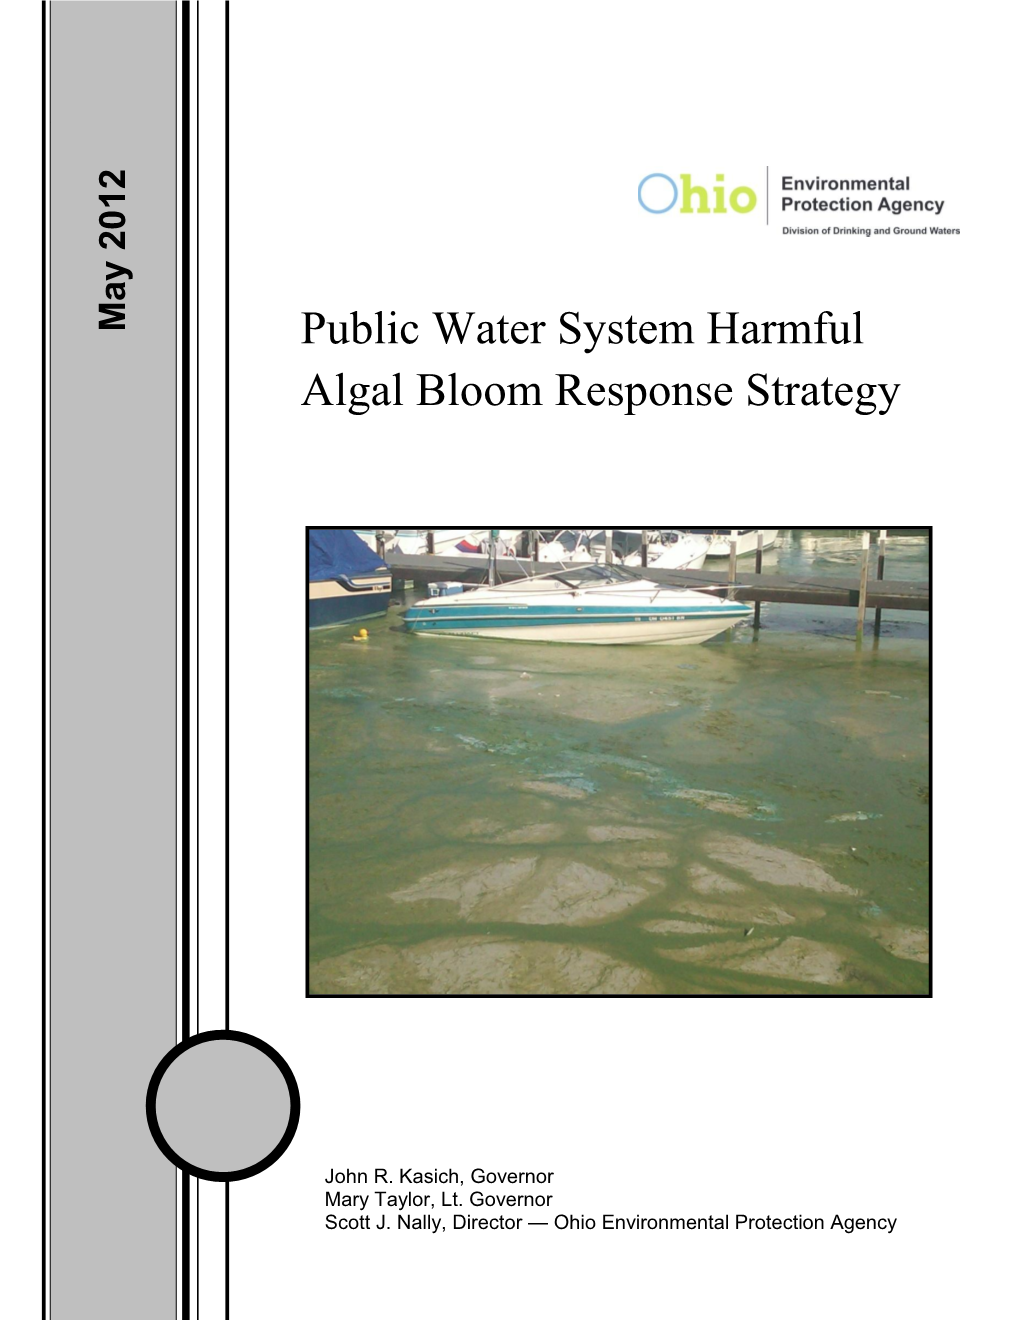 Public Water System Harmful Algal Bloom Response Strategy